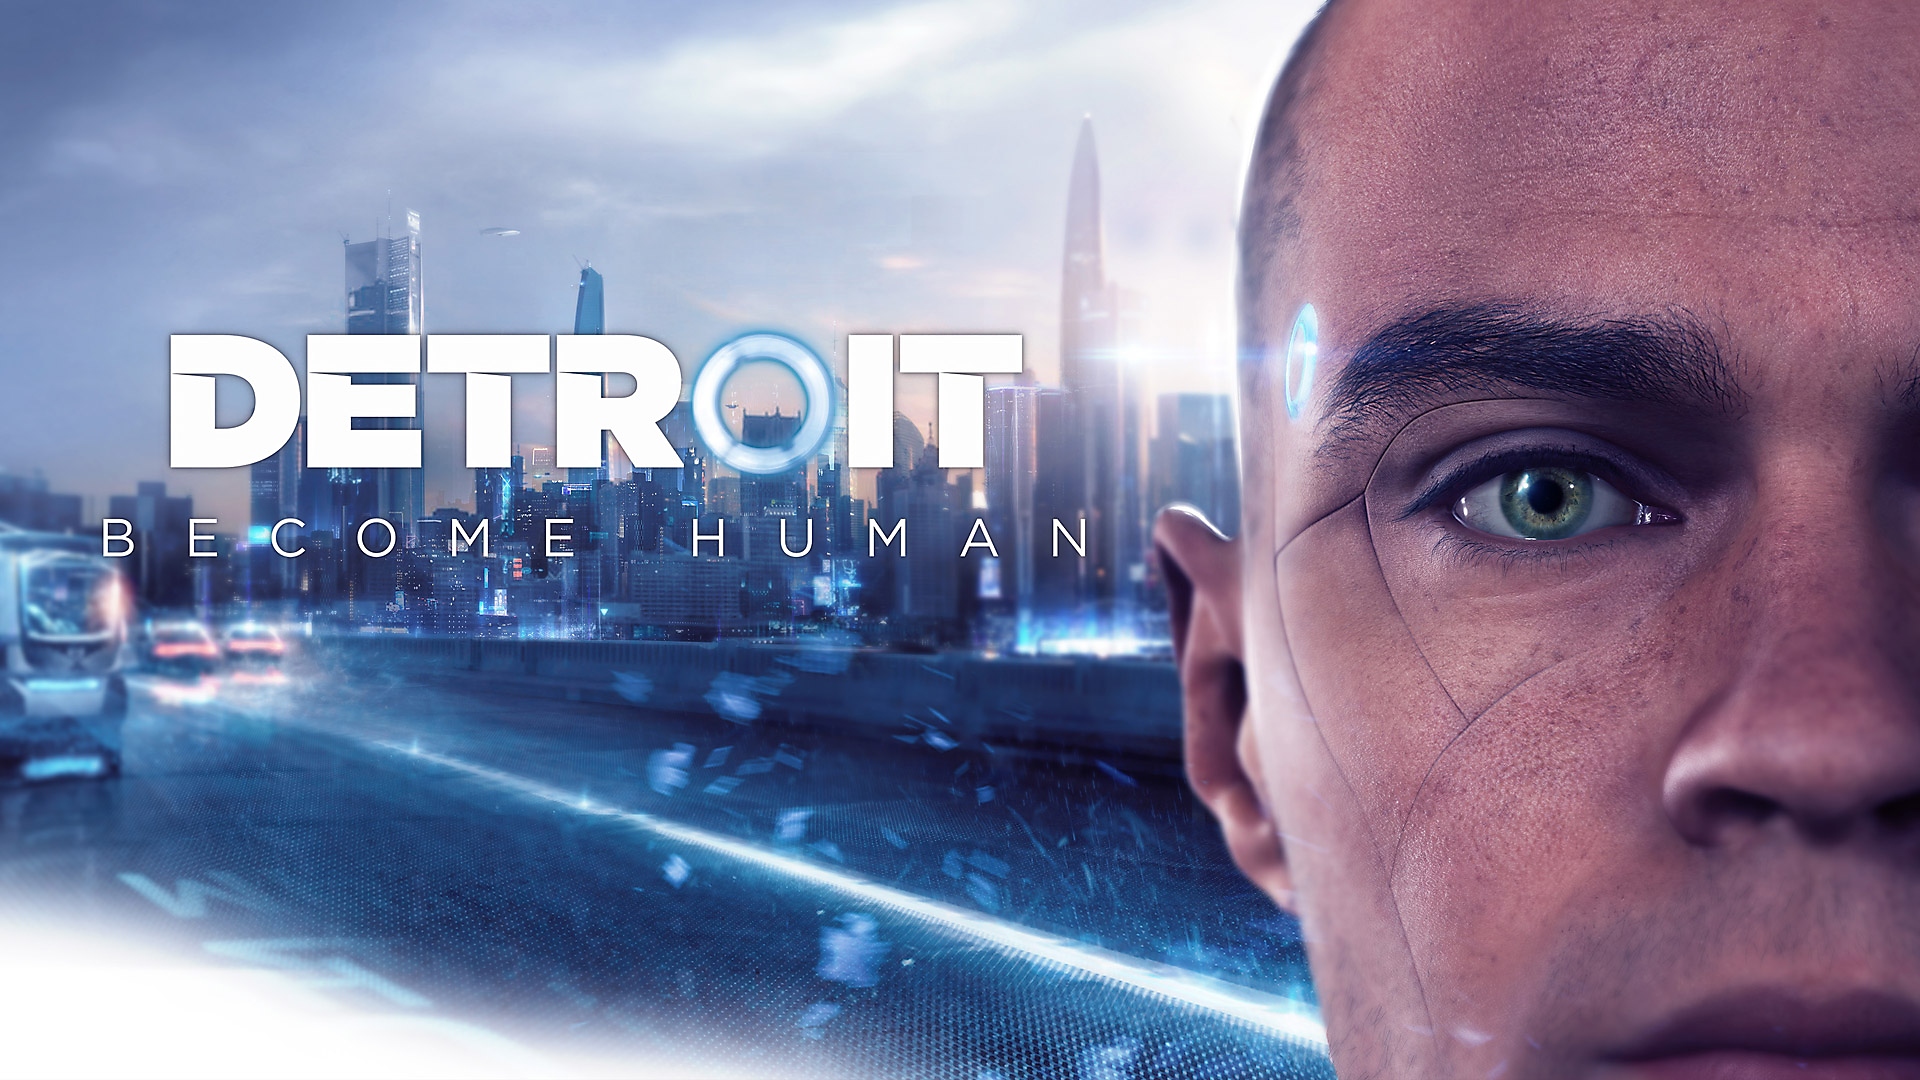 Detroit: Become Human – Launch Trailer | PS4